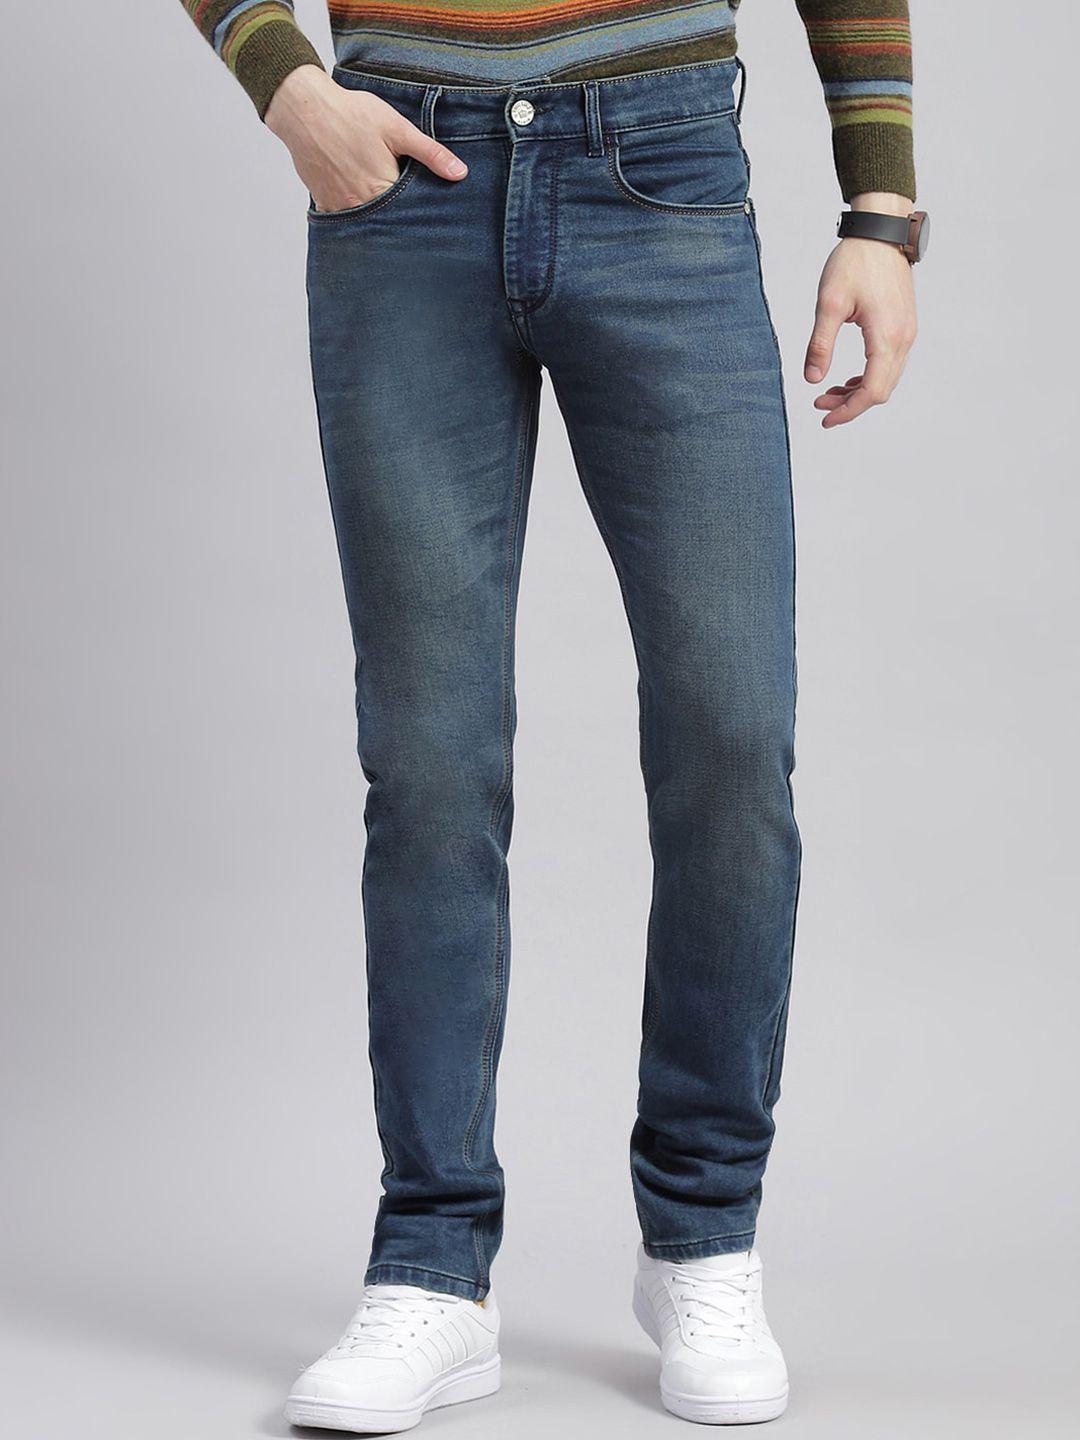 monte-carlo-men-mid-rise-heavy-fade-clean-look-jeans